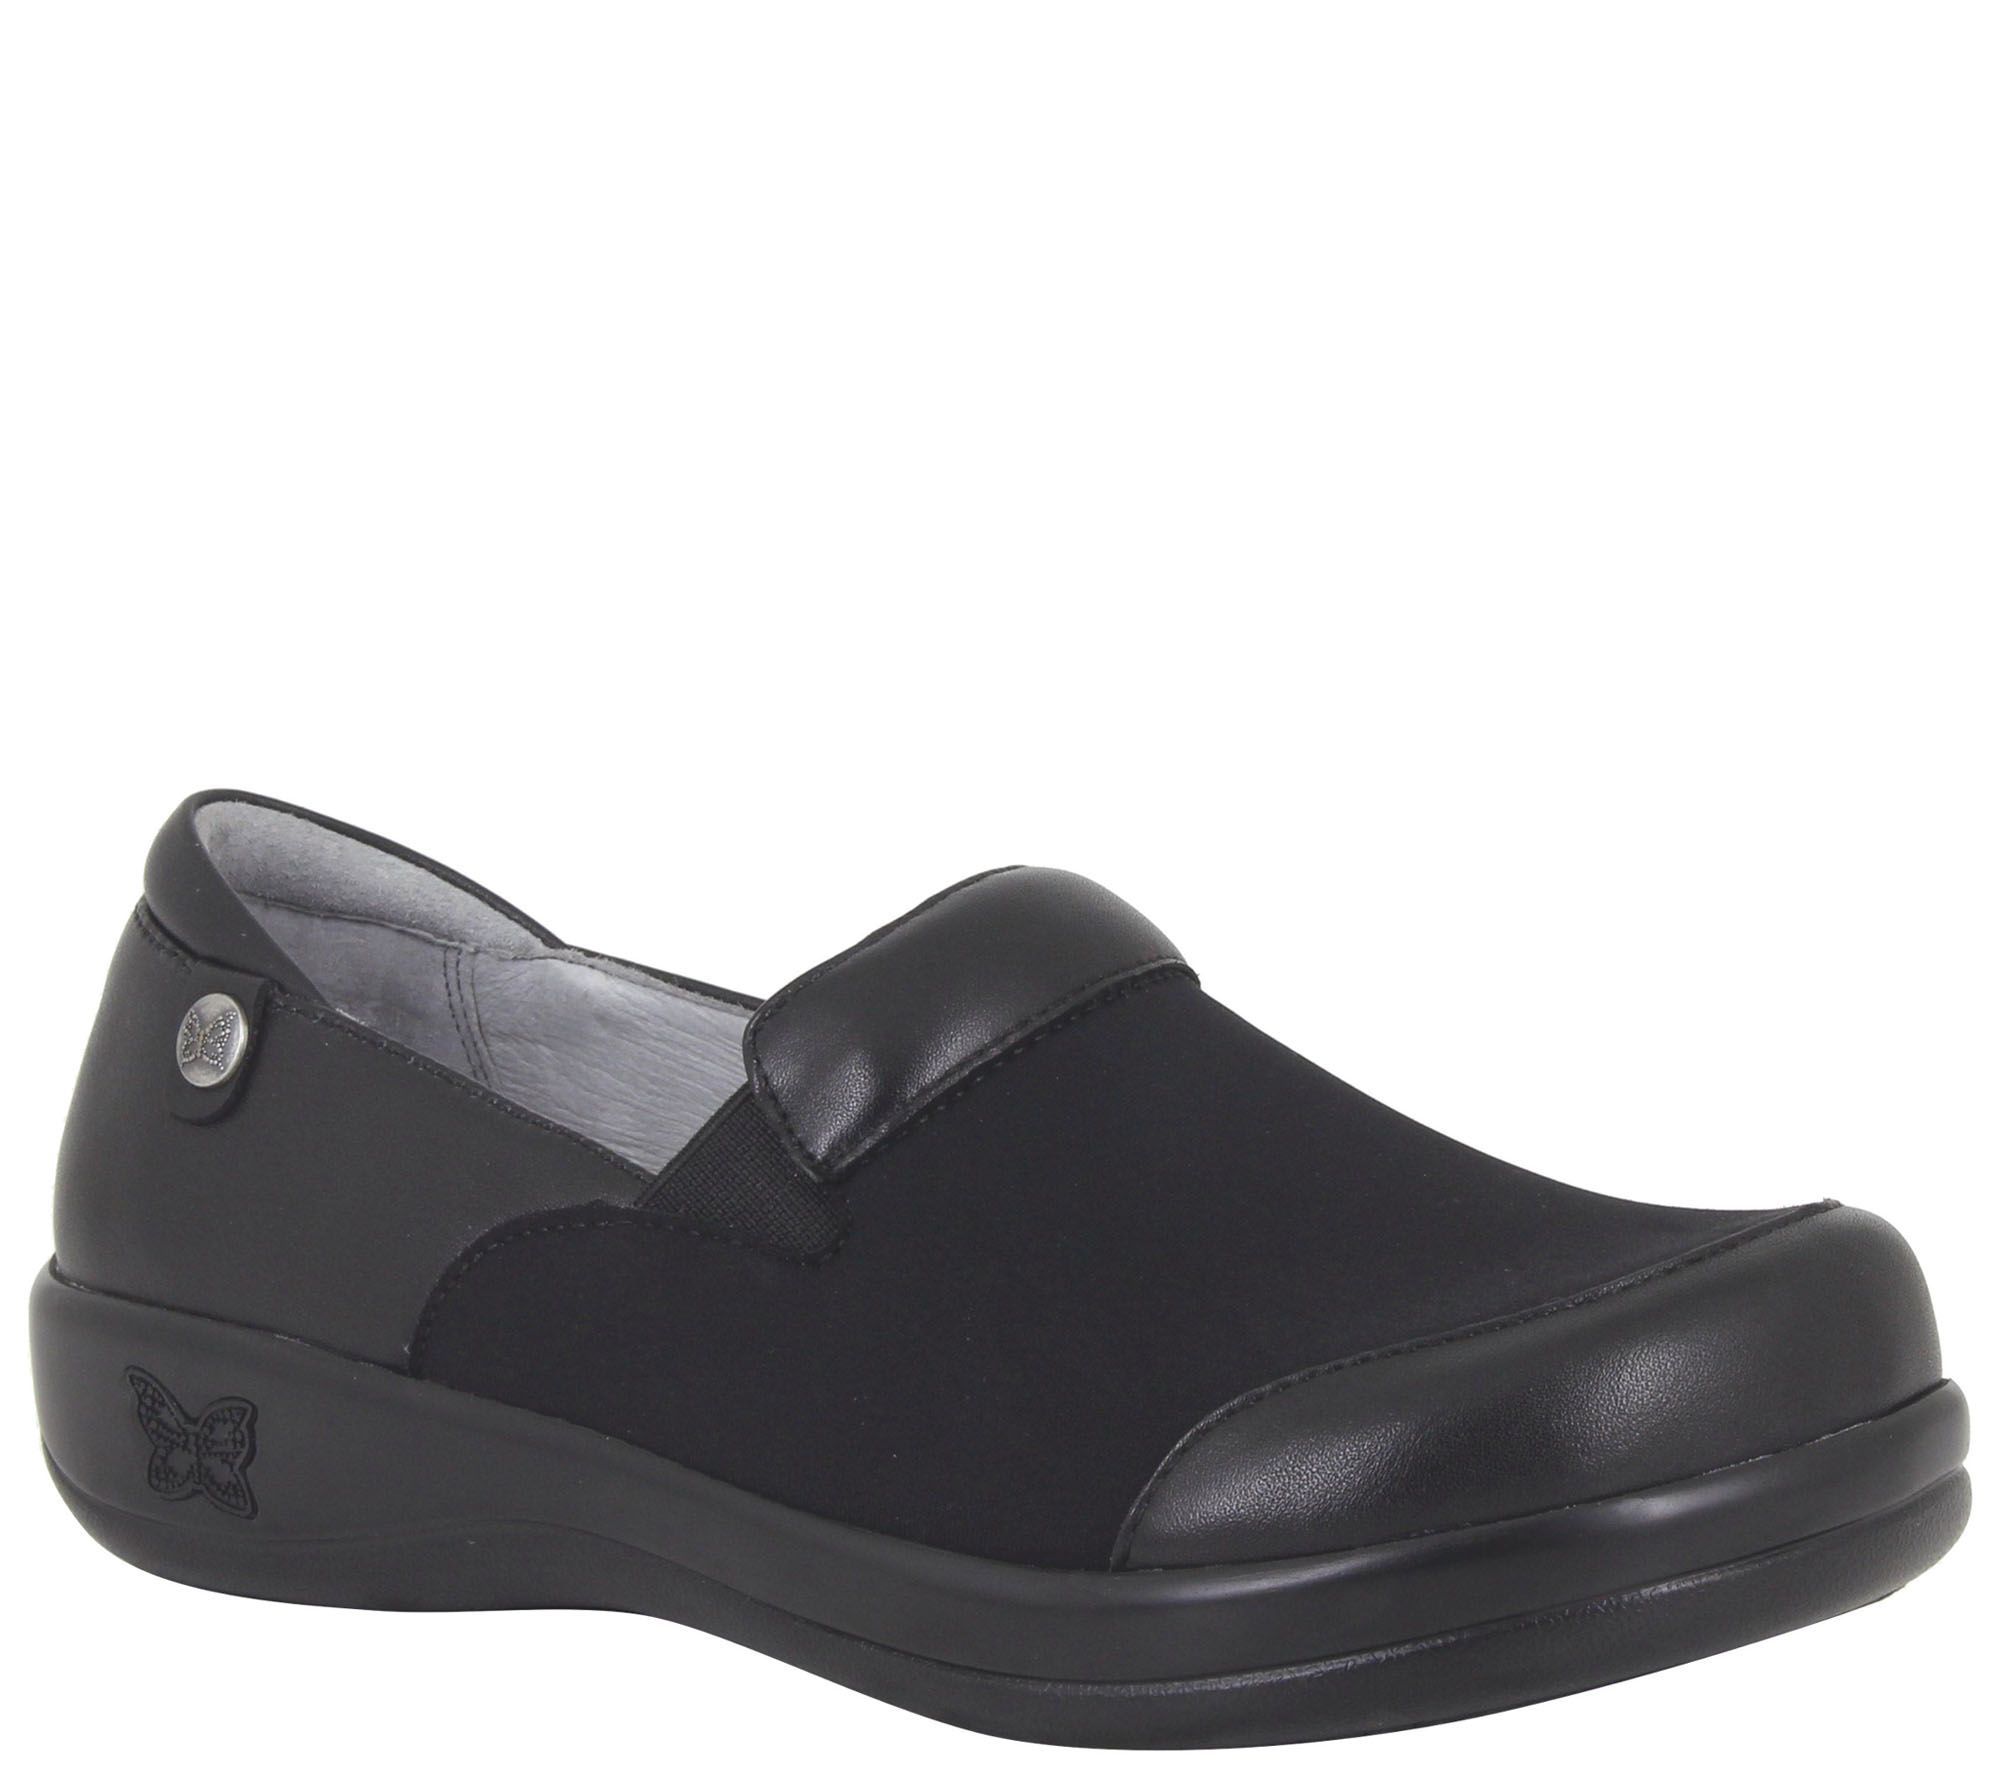 Alegria Leather Slip-On Shoes - Keli - QVC.com